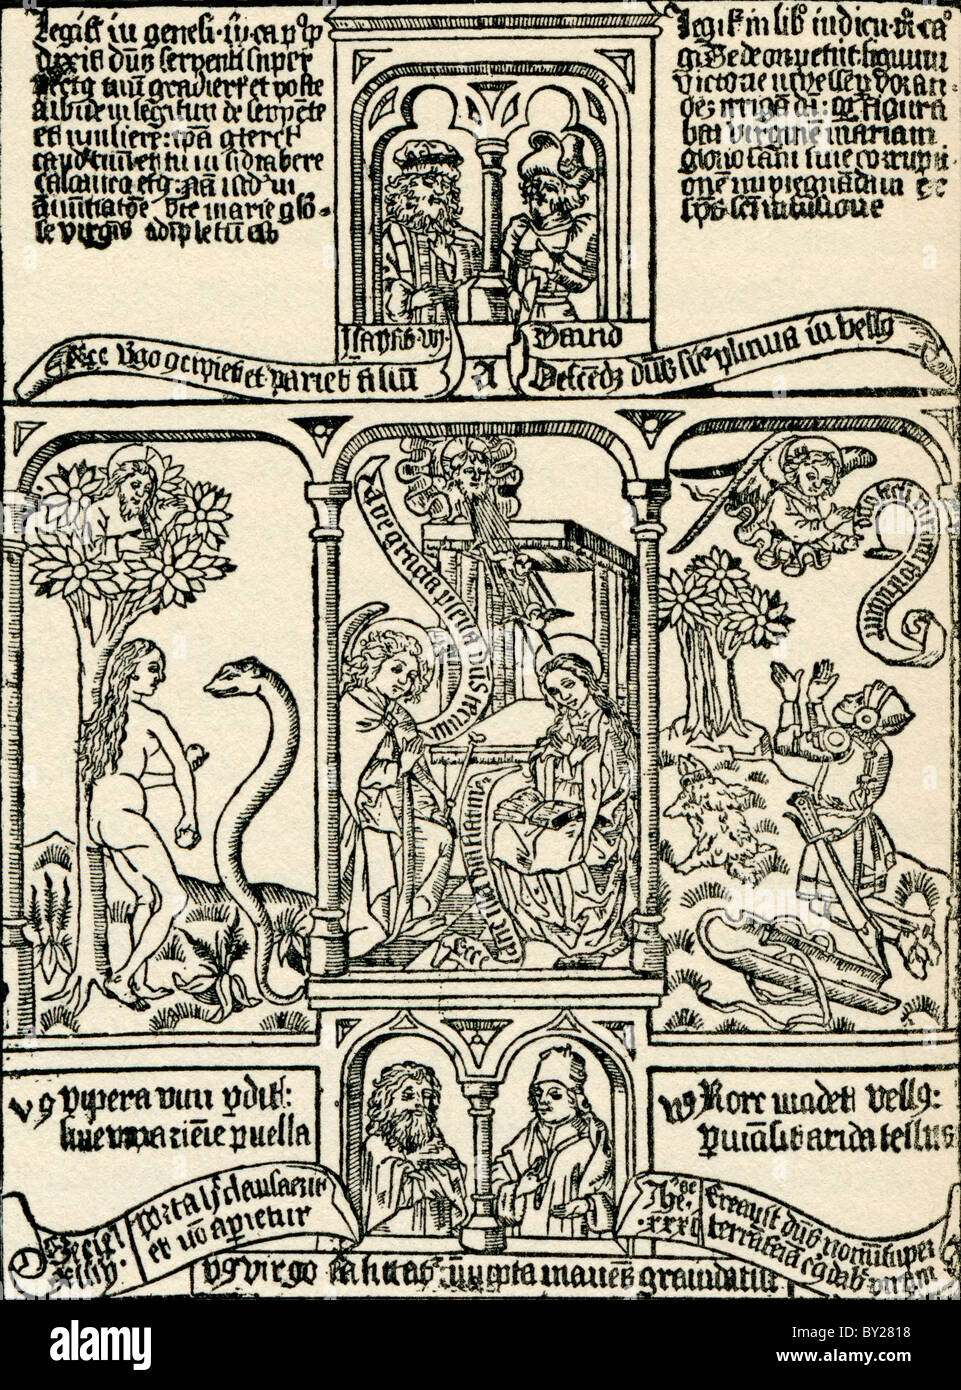 Biblical illustrations. From Geschiedenis van Nederland, published 1936. Stock Photo